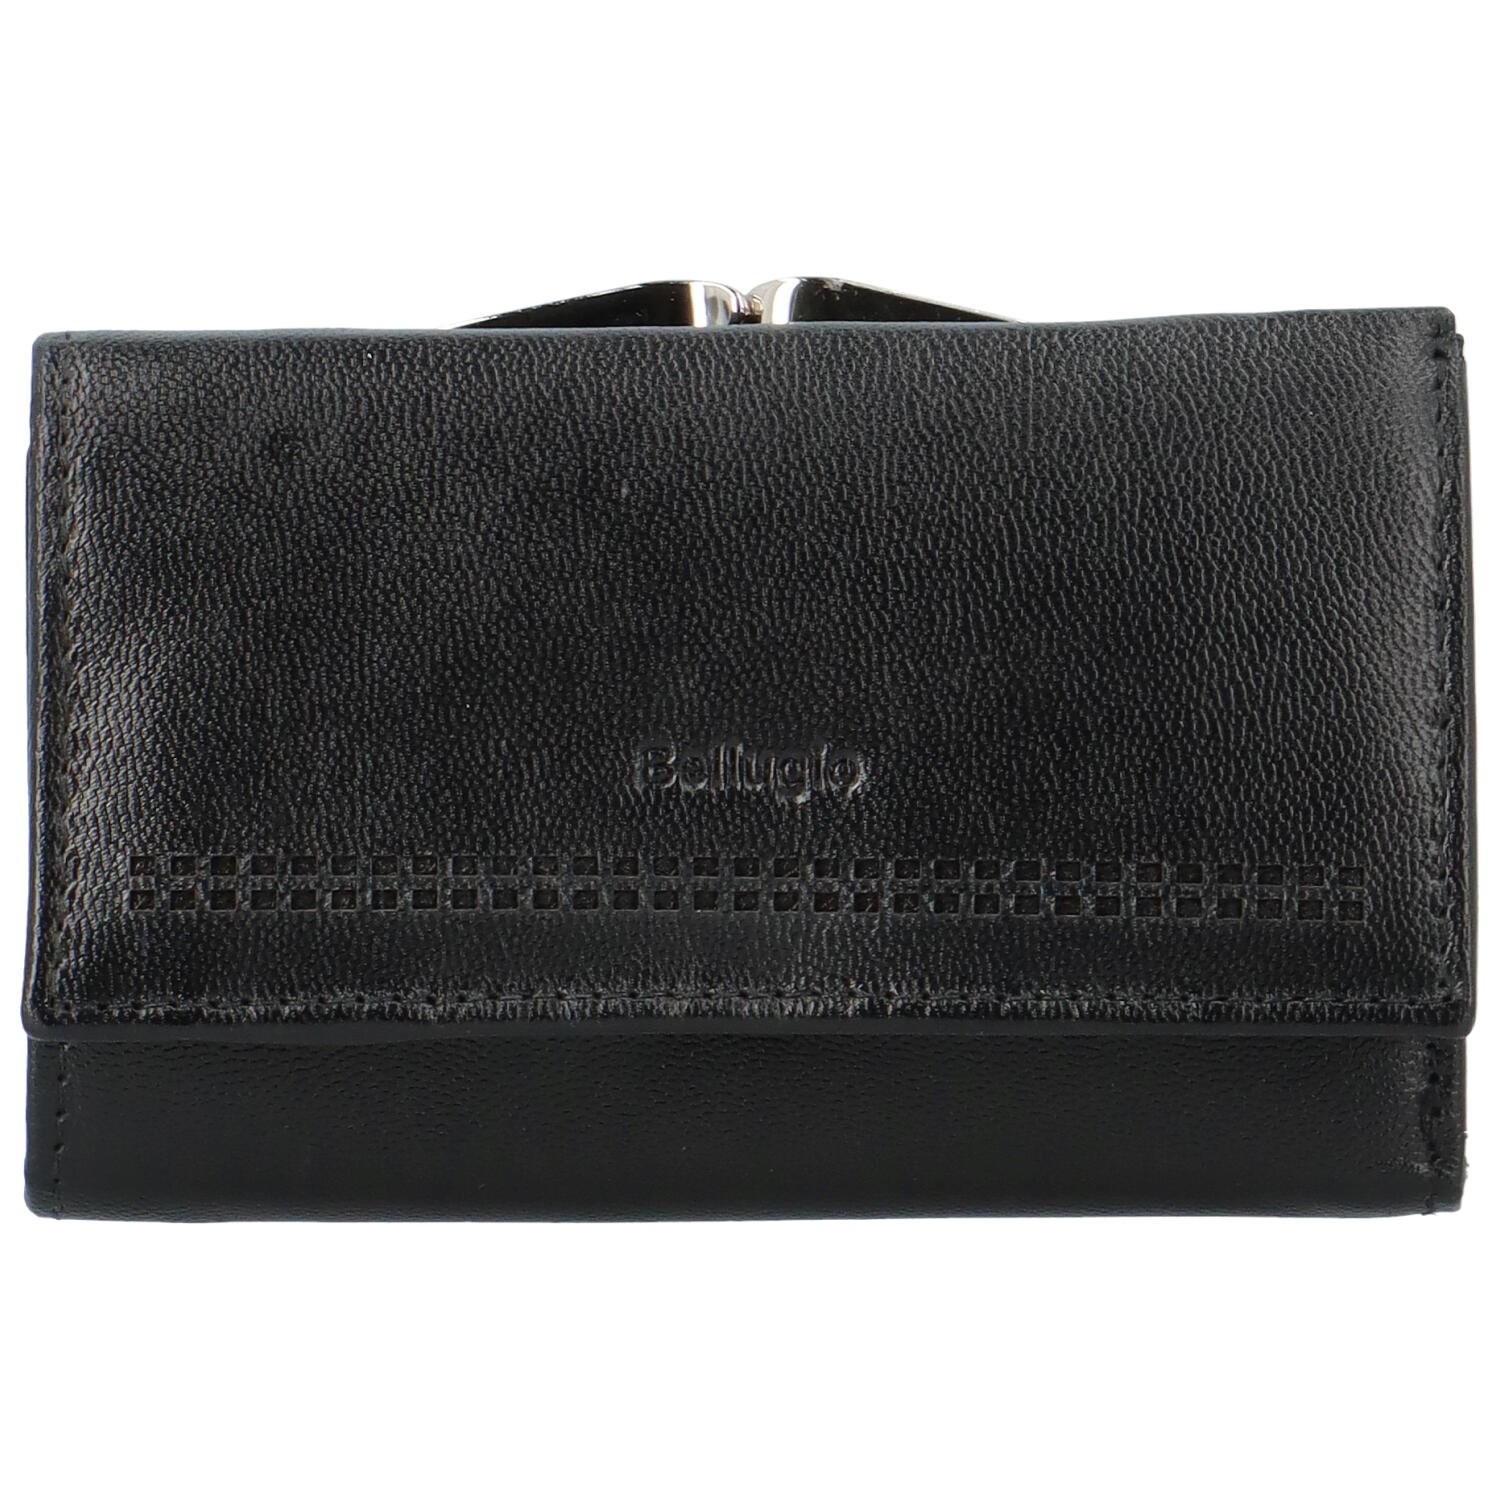 Dámská kožená peněženka černá - Bellugio Xagnana černá